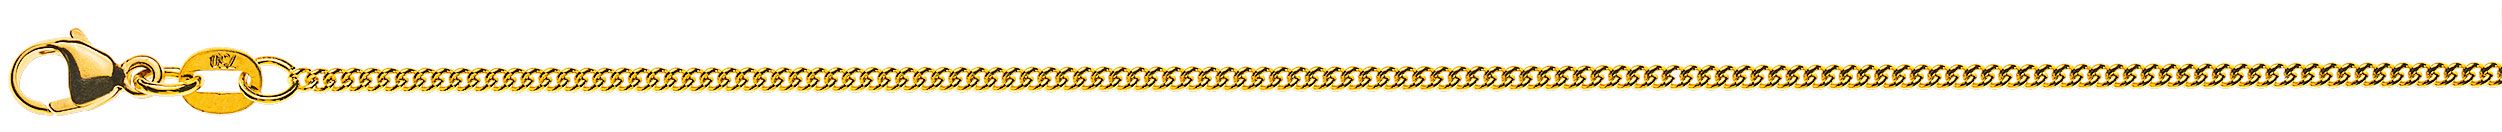 AURONOS Prestige Necklace yellow gold 18K round curb chain 60cm 1.6mm